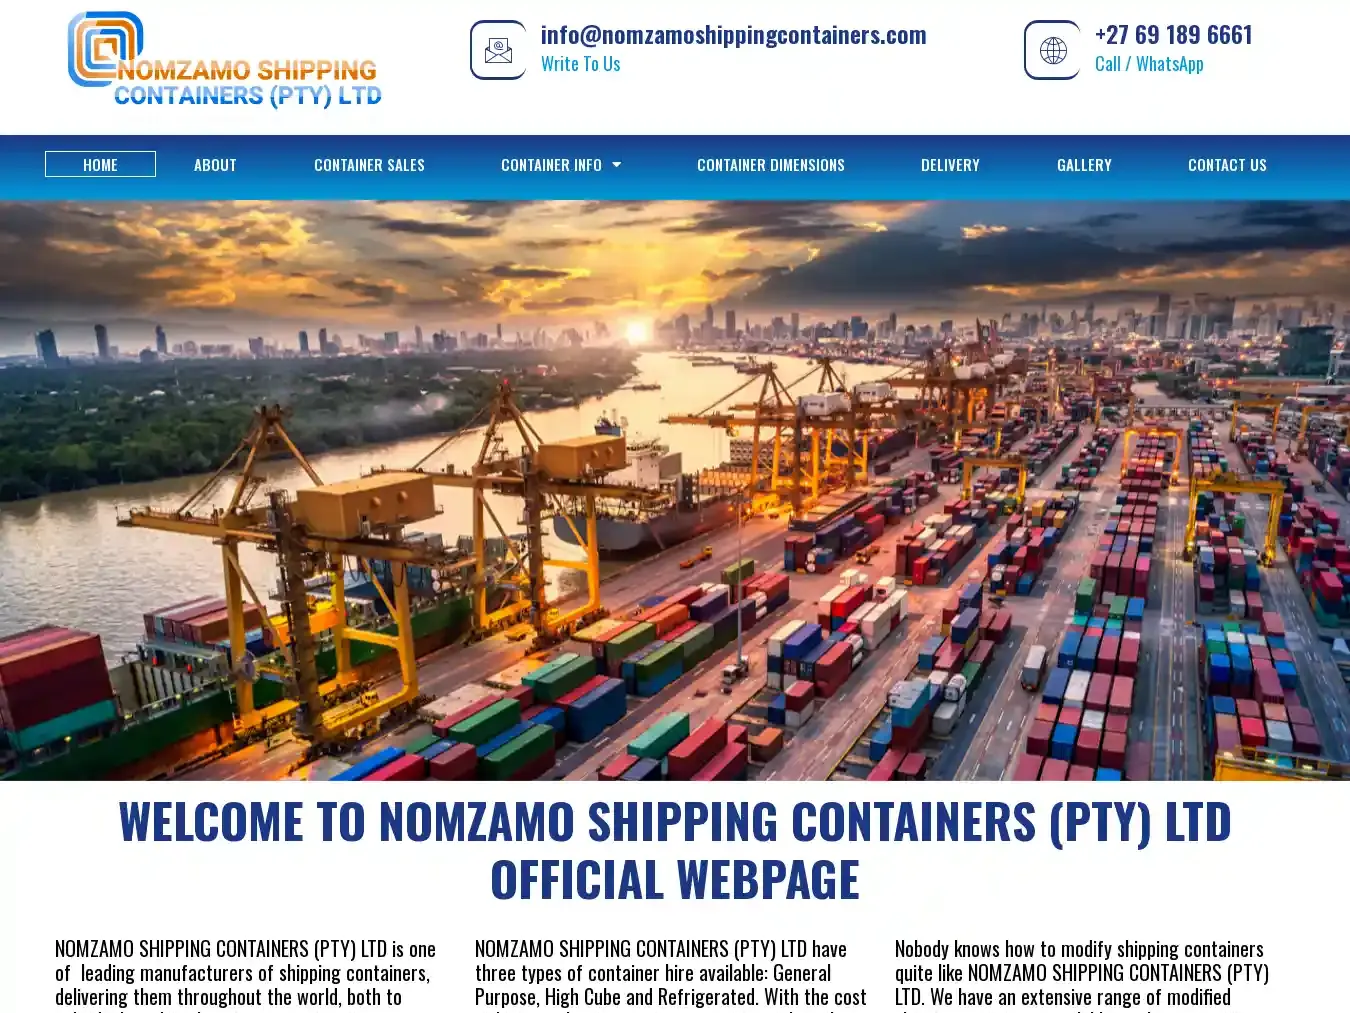 Nomzamoshippingcontainers.com Fraudulent Container website.